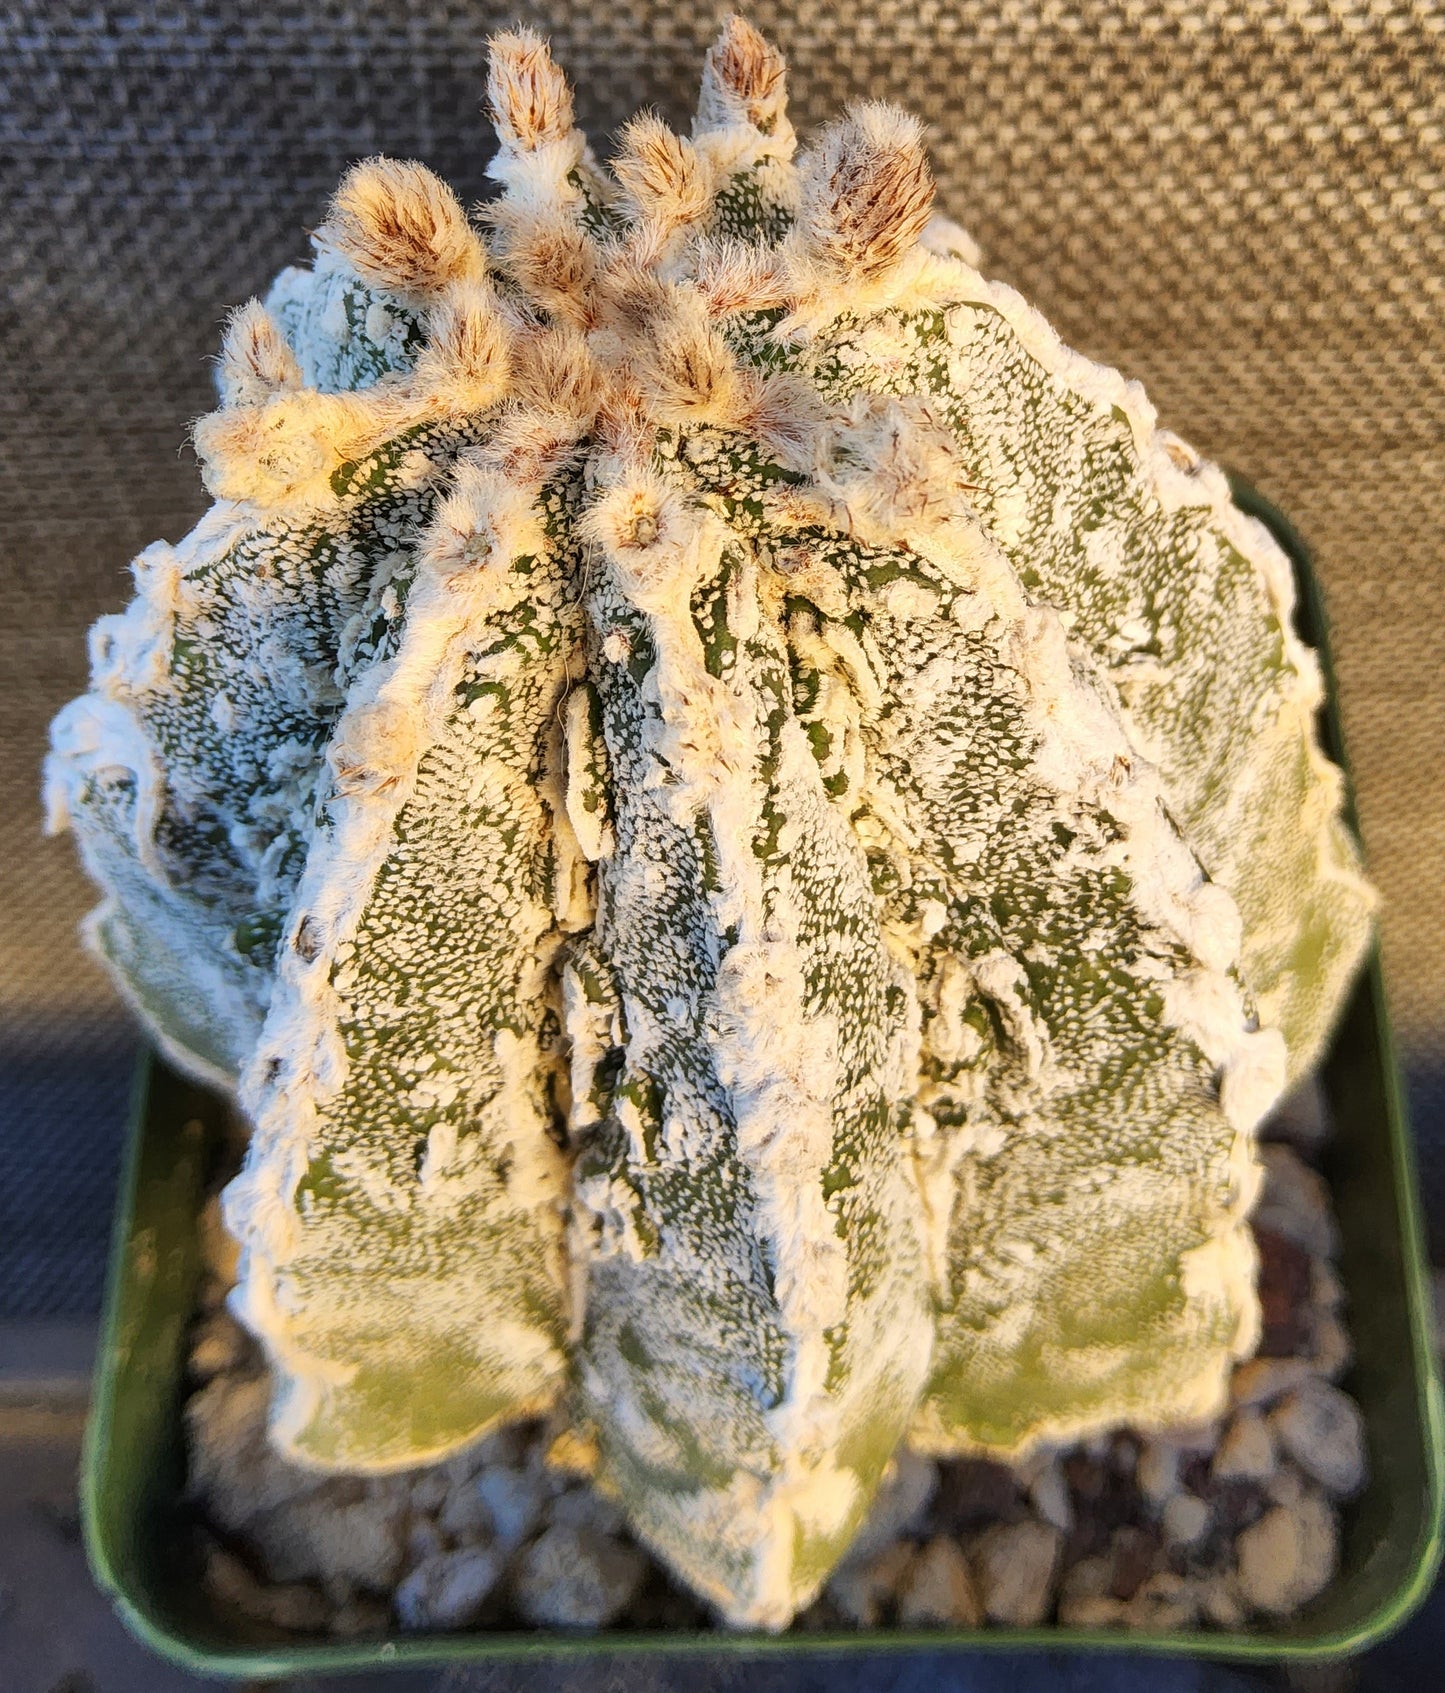 Astrophytum myriostygma Fukuryu Hakujo Hakuun Live Cactus Growing in a 4 Inch